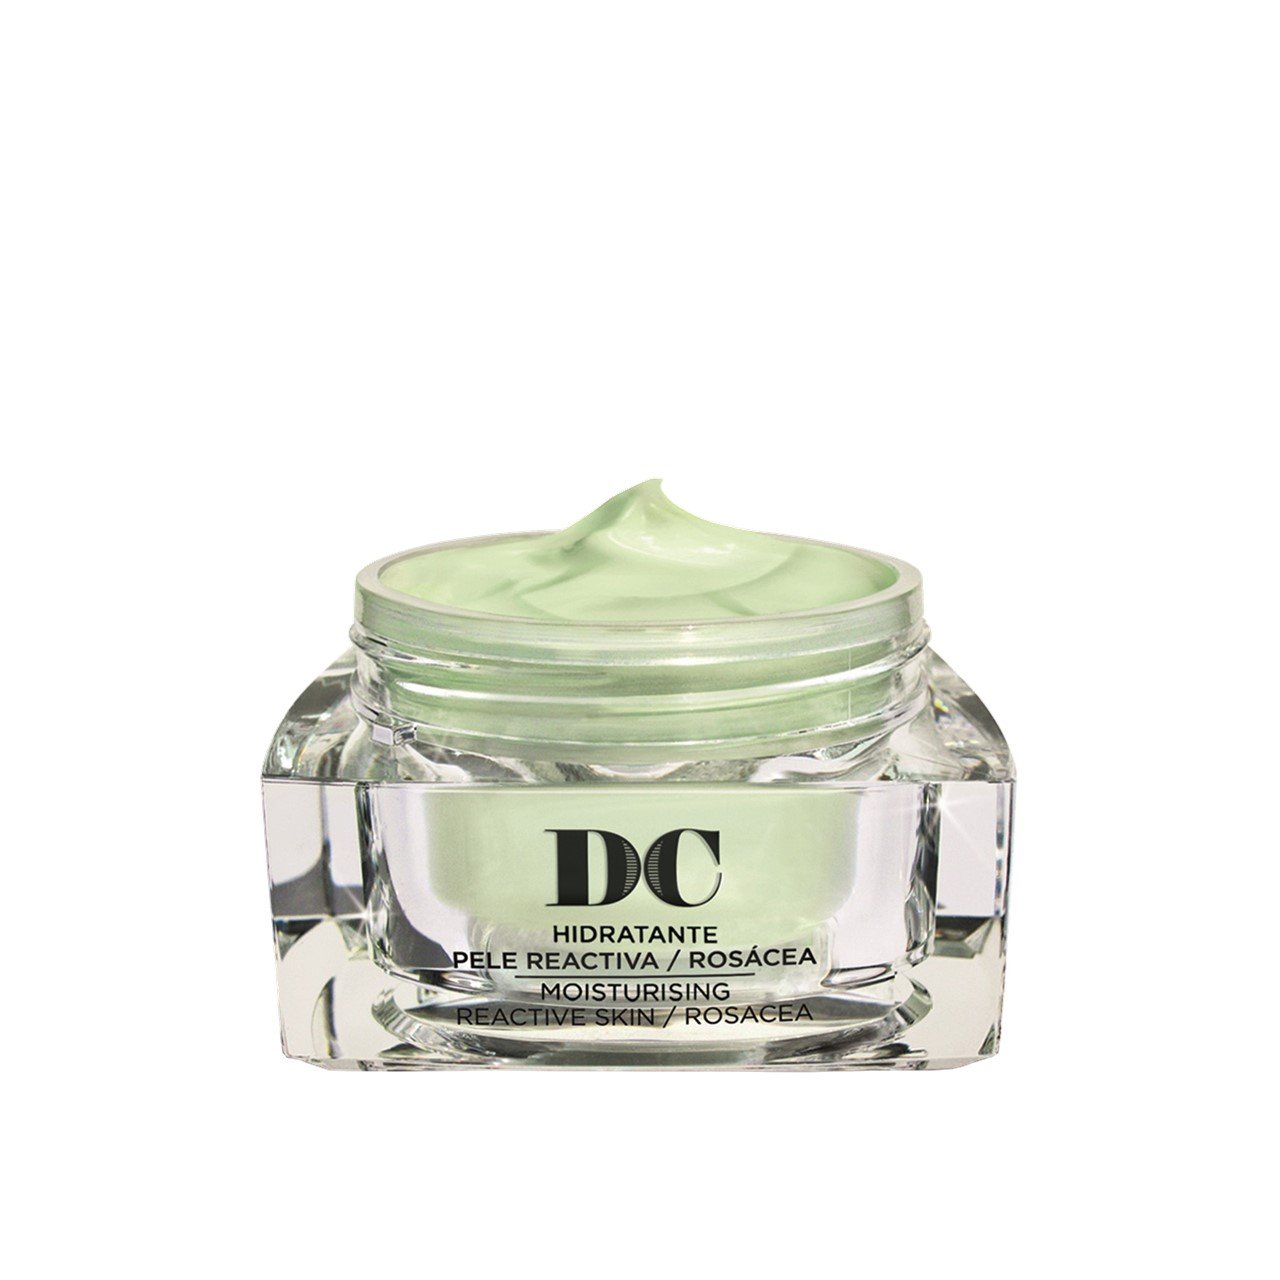 DC Moisturizing Cream for Reactive Skin/Rosacea 50ml